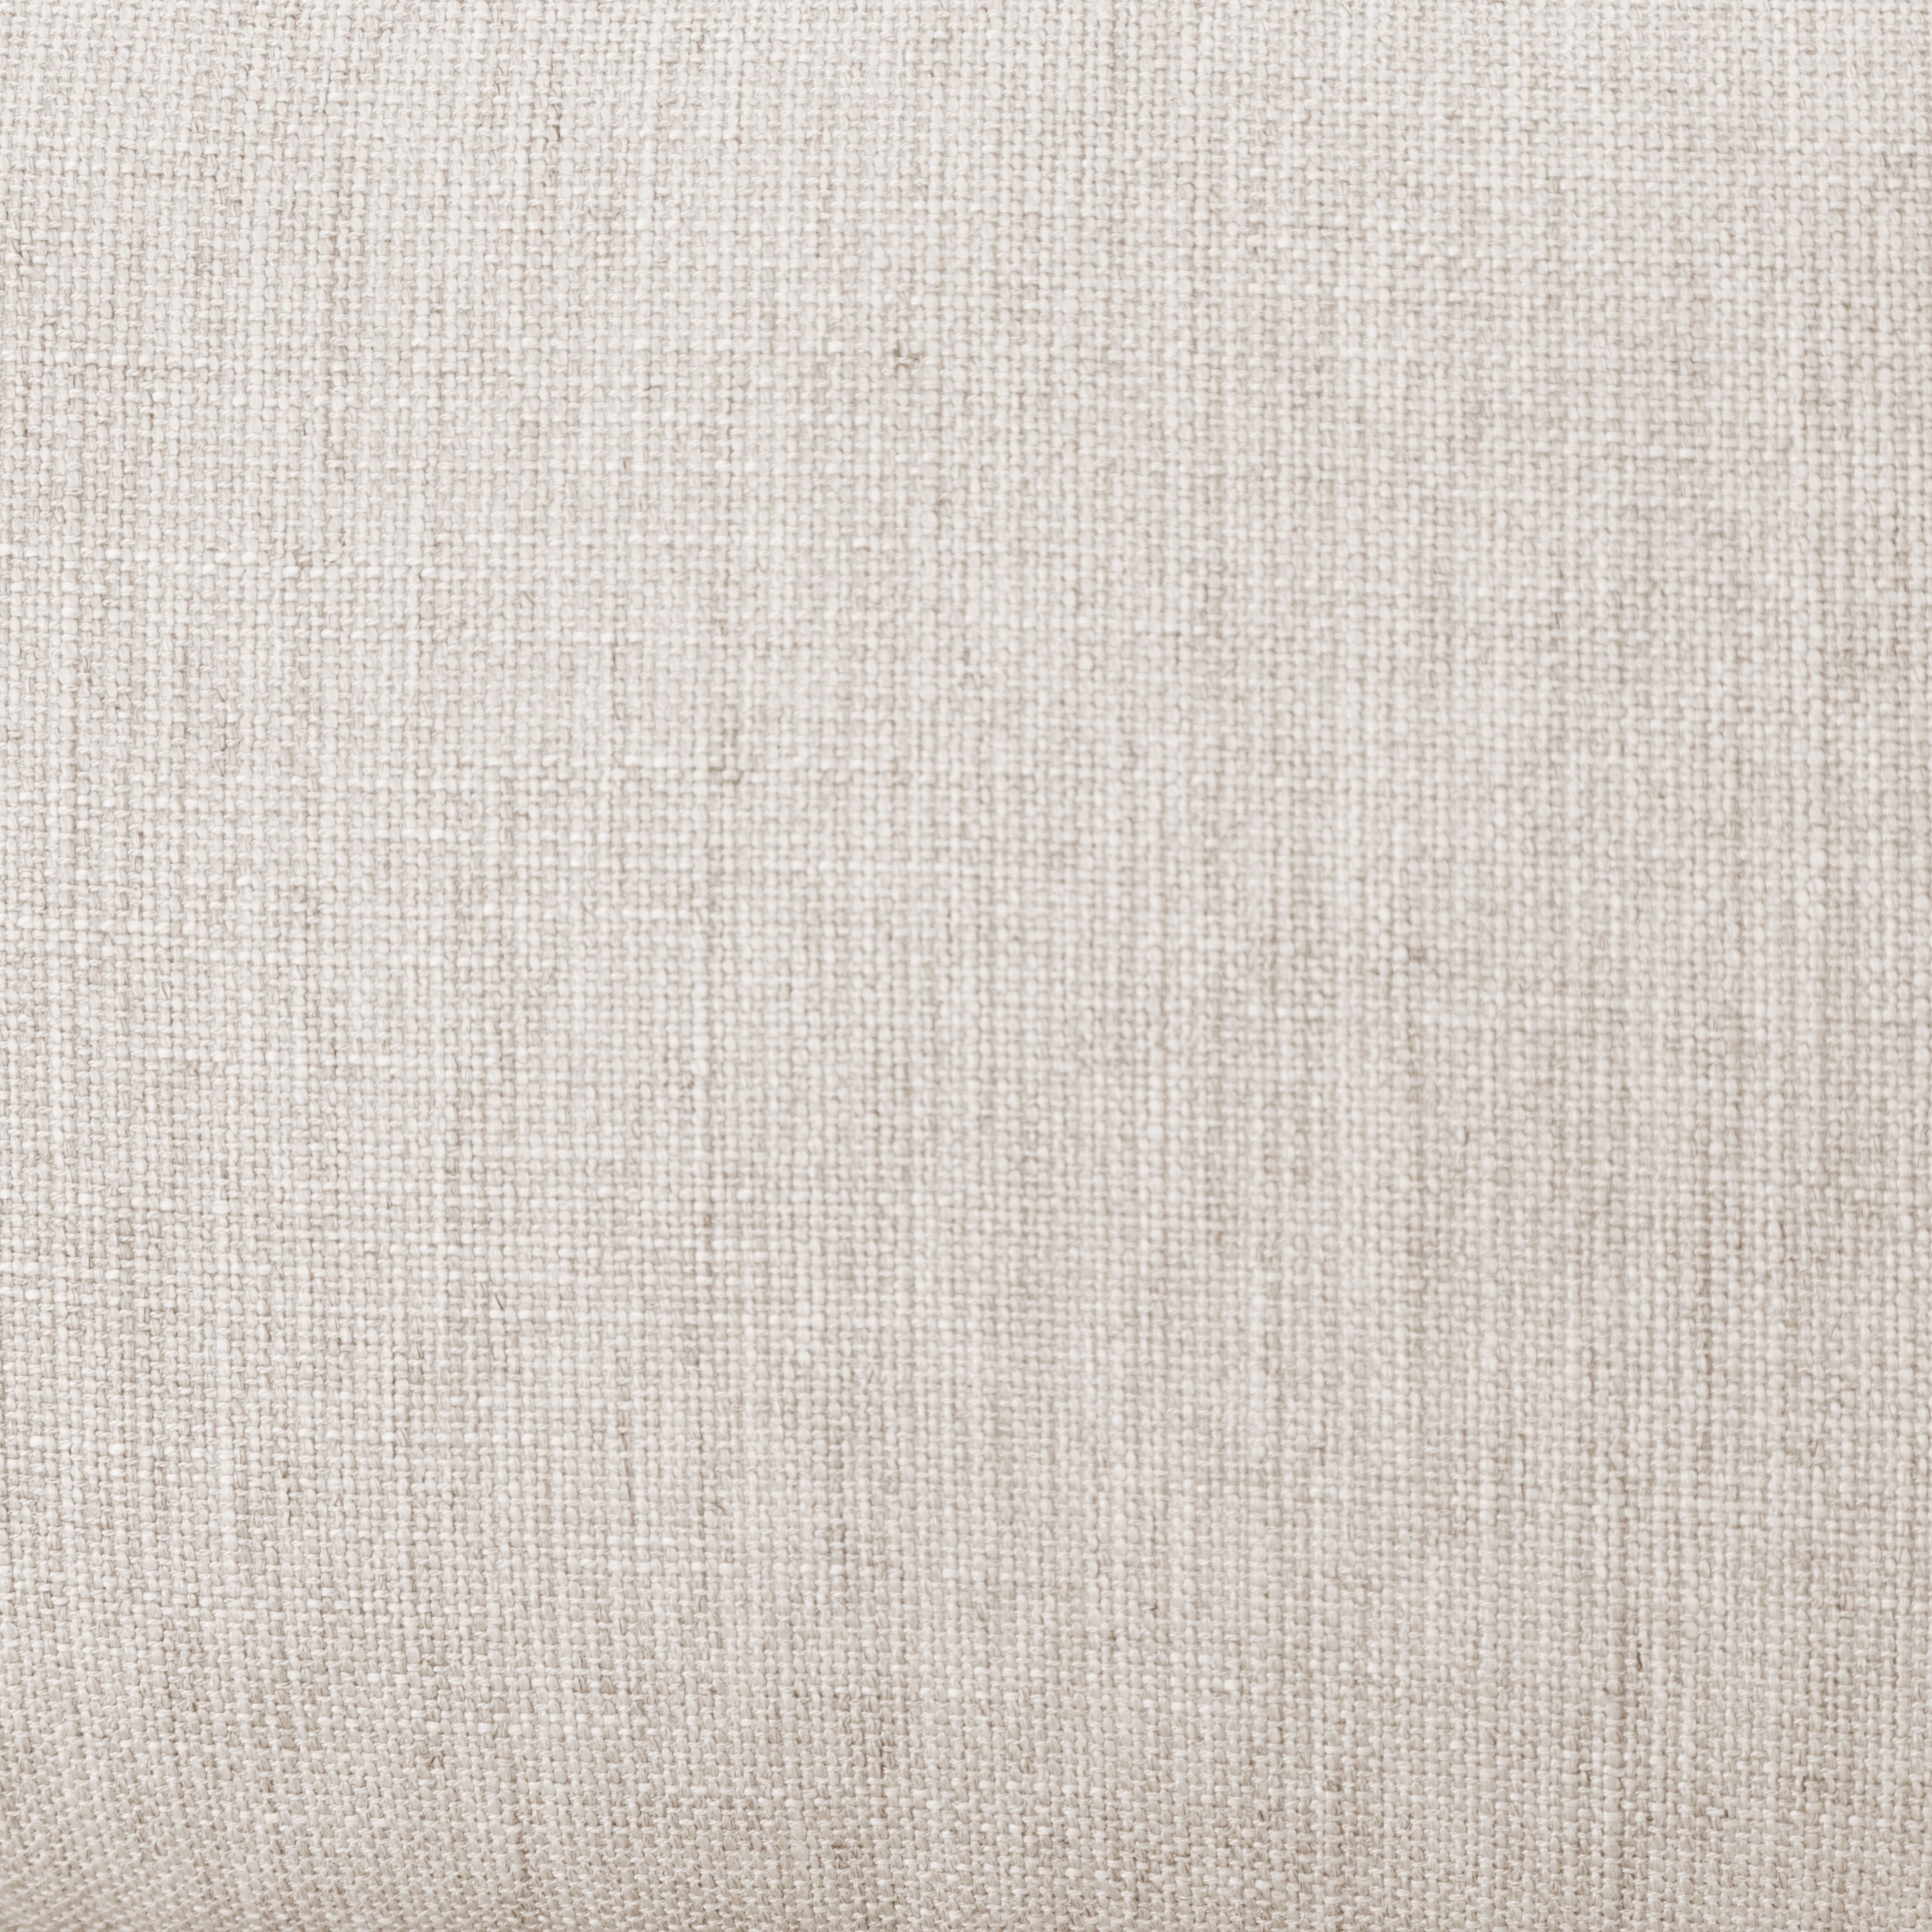 Bloor Sofa-98"-Essence Natural - Image 6